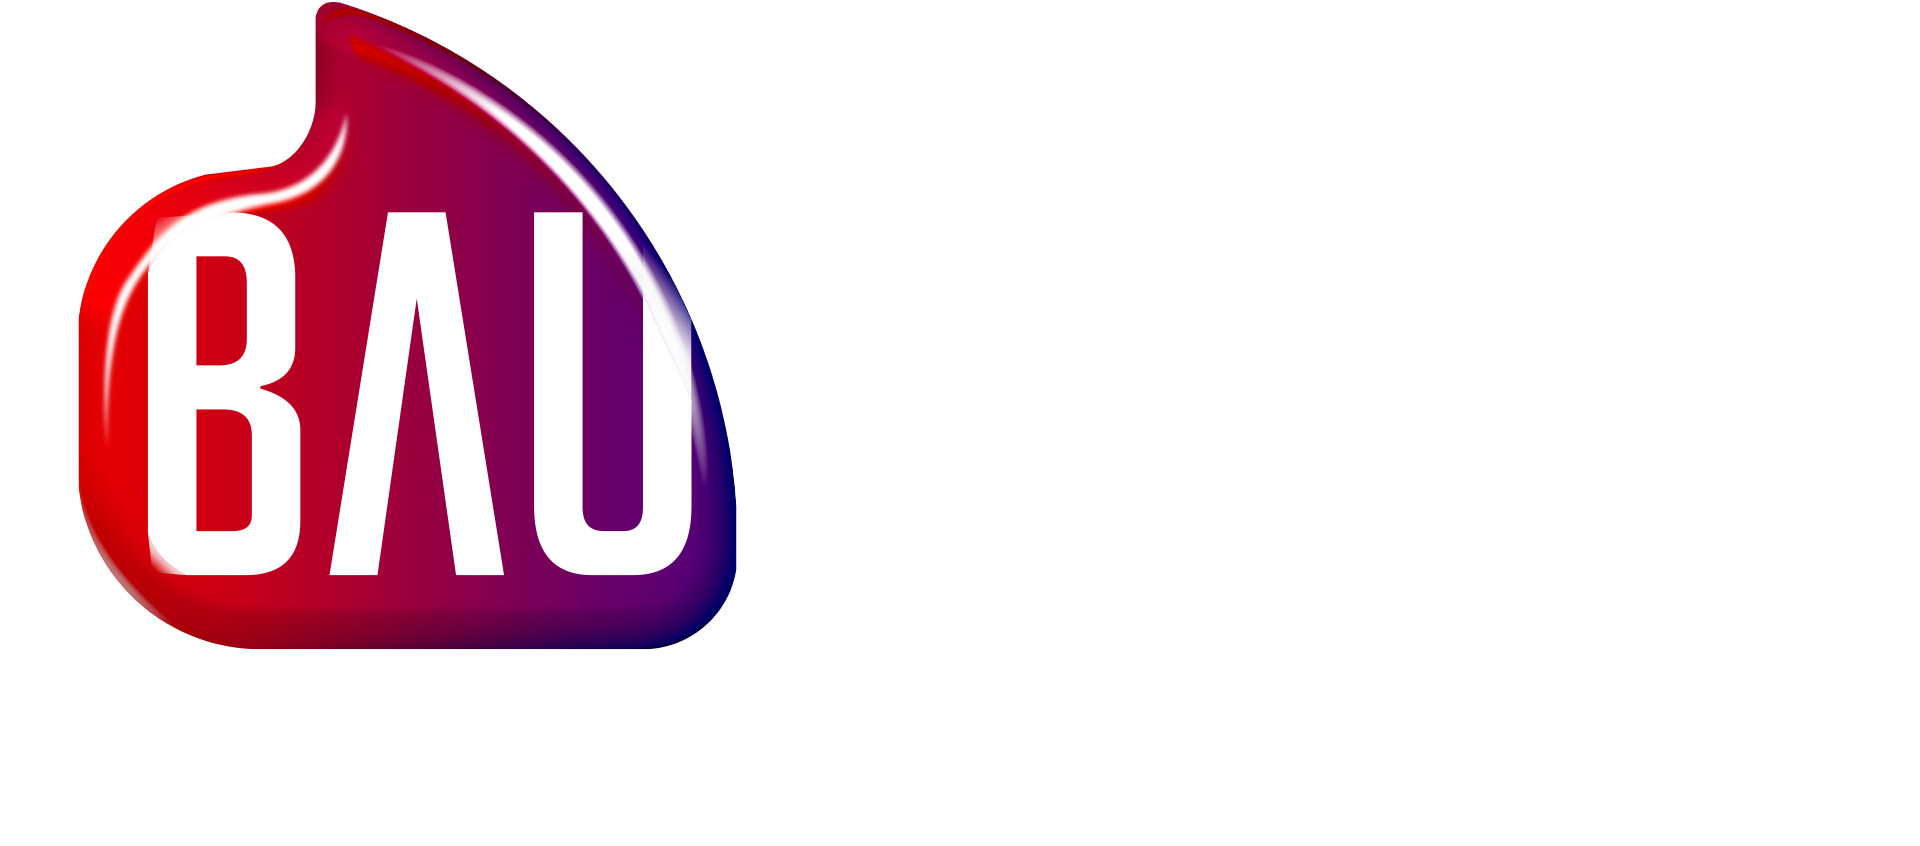 1-bauvisuell-logo.png